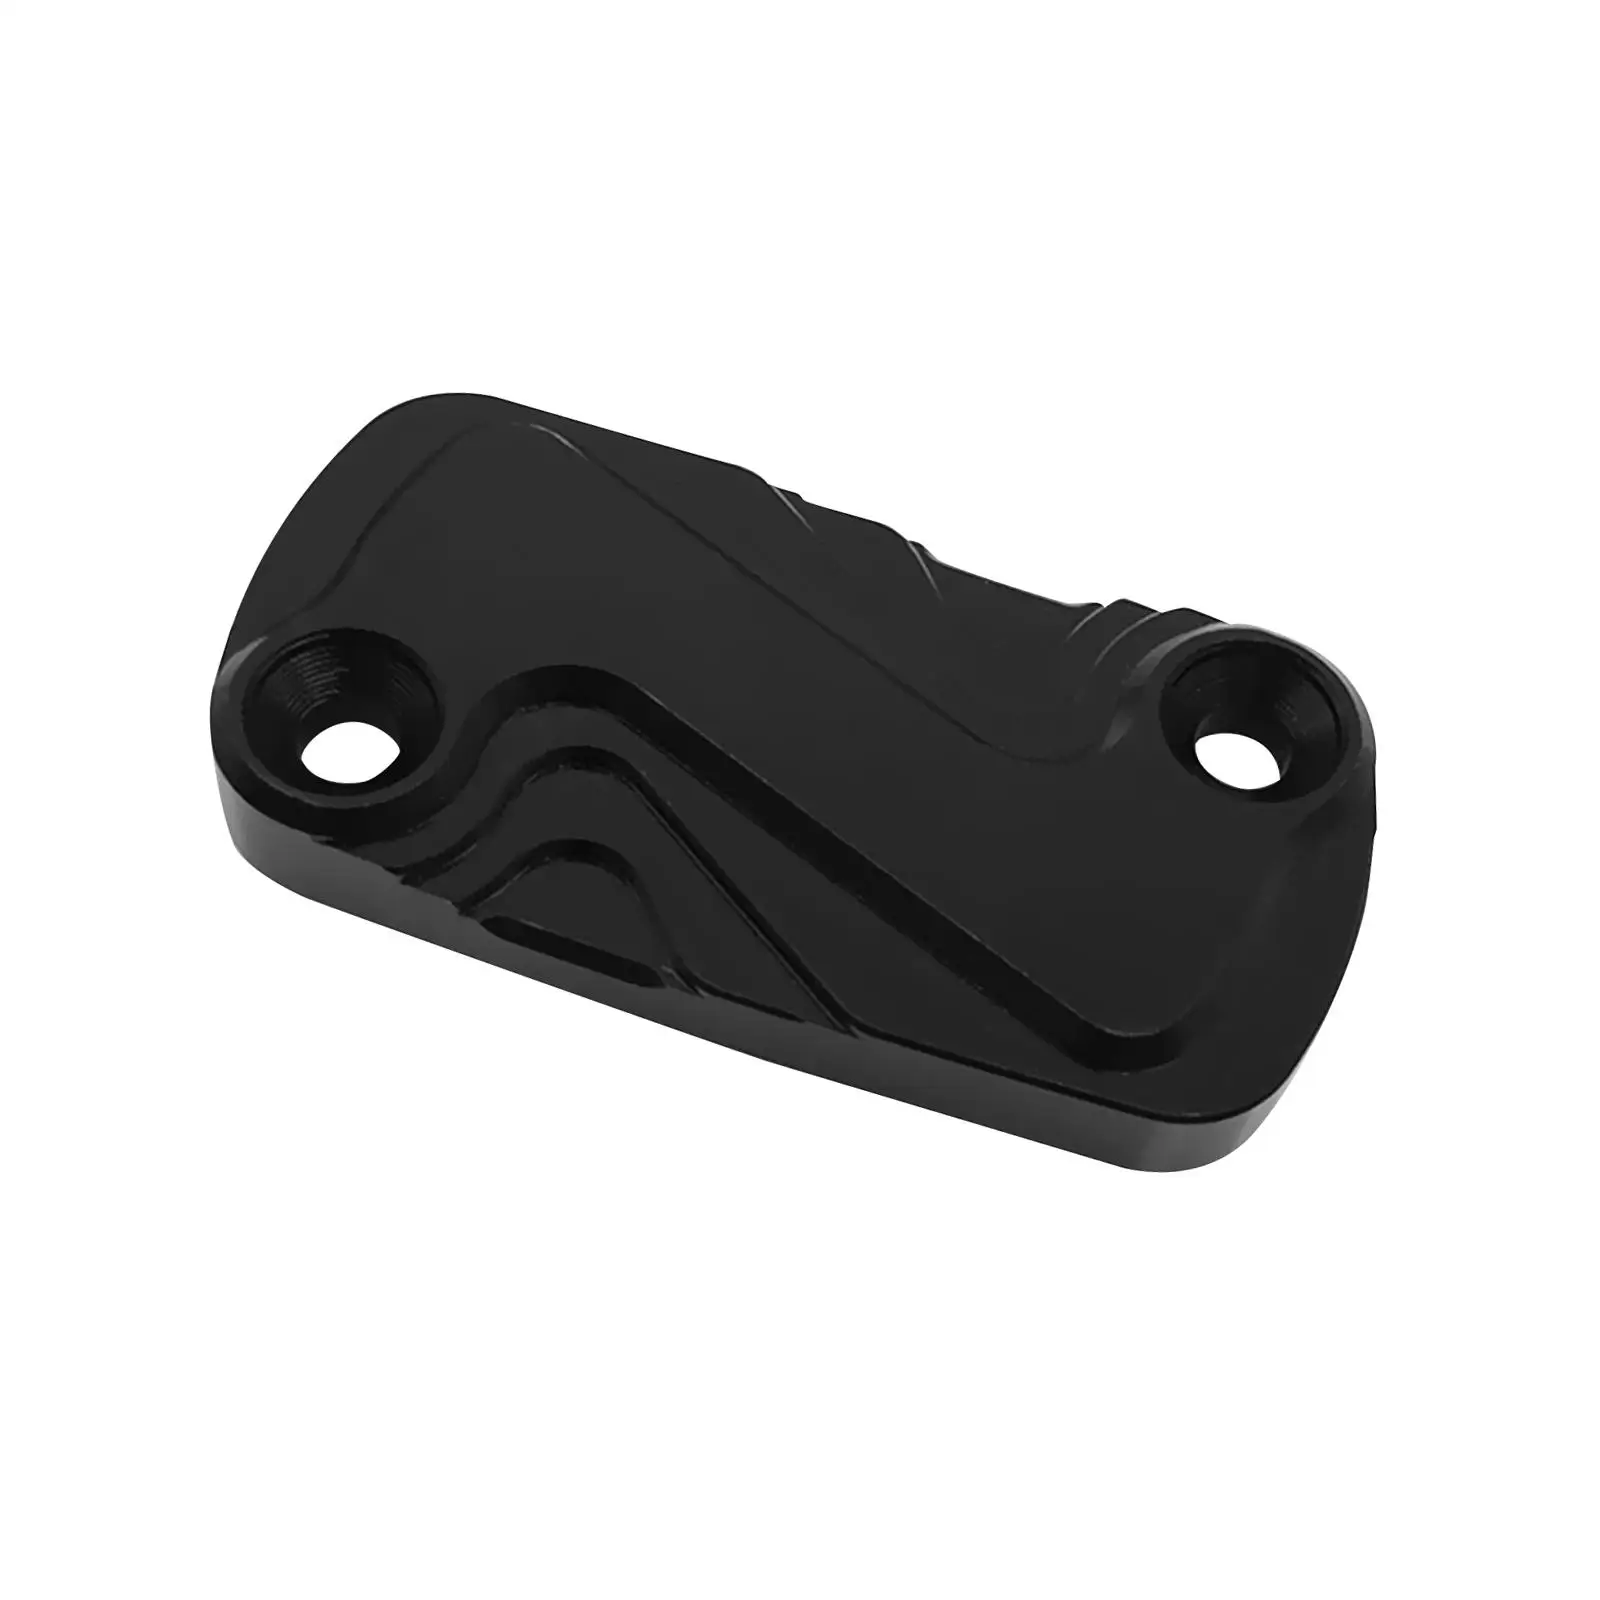 Front Brake Reservoir Cover Motorcycle Screw Cap Repair Accessories fors750 Accessories Replacement Premium Durable